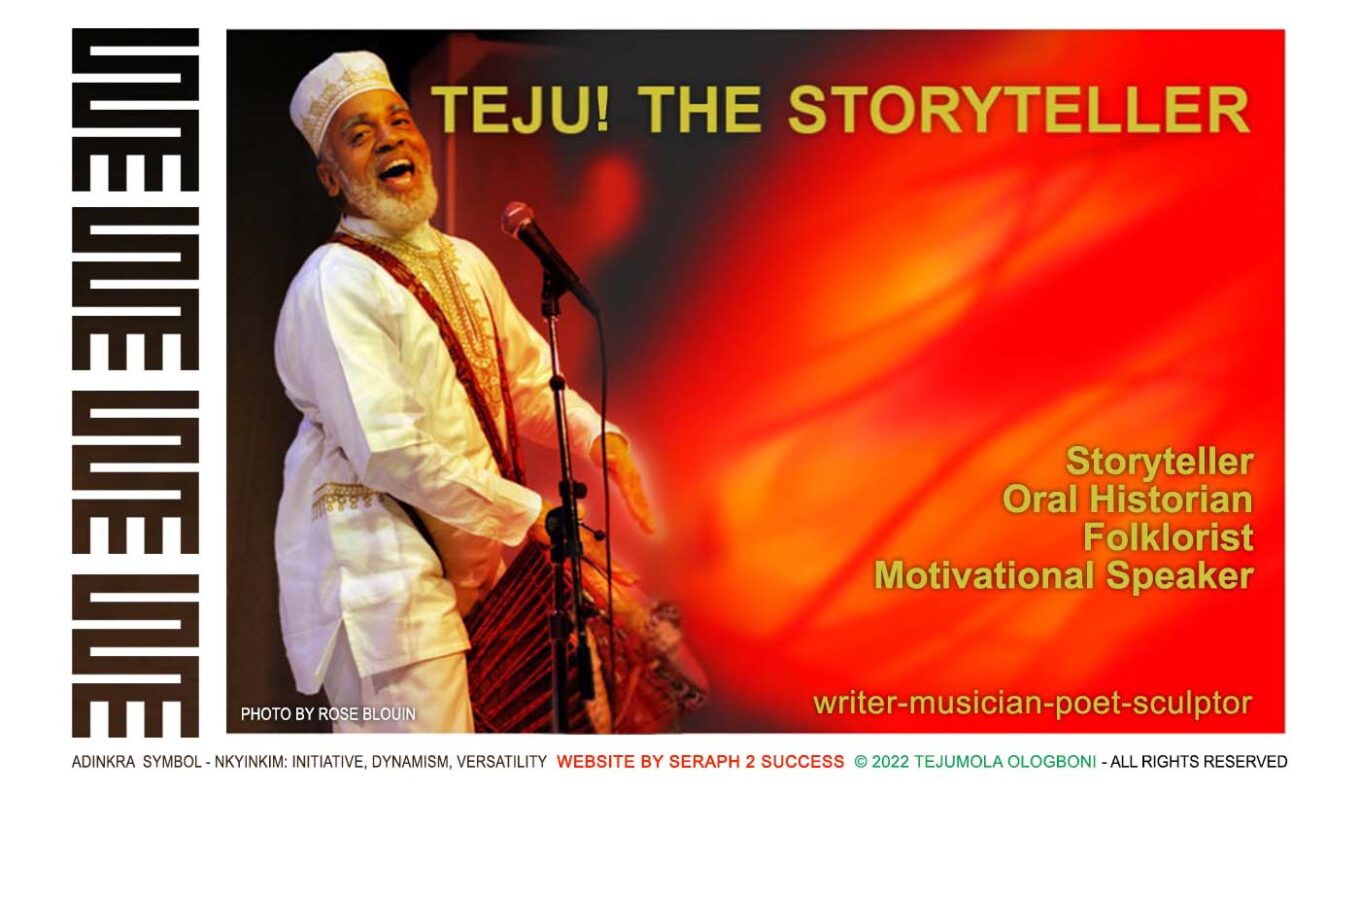 Teju! The Storyteller